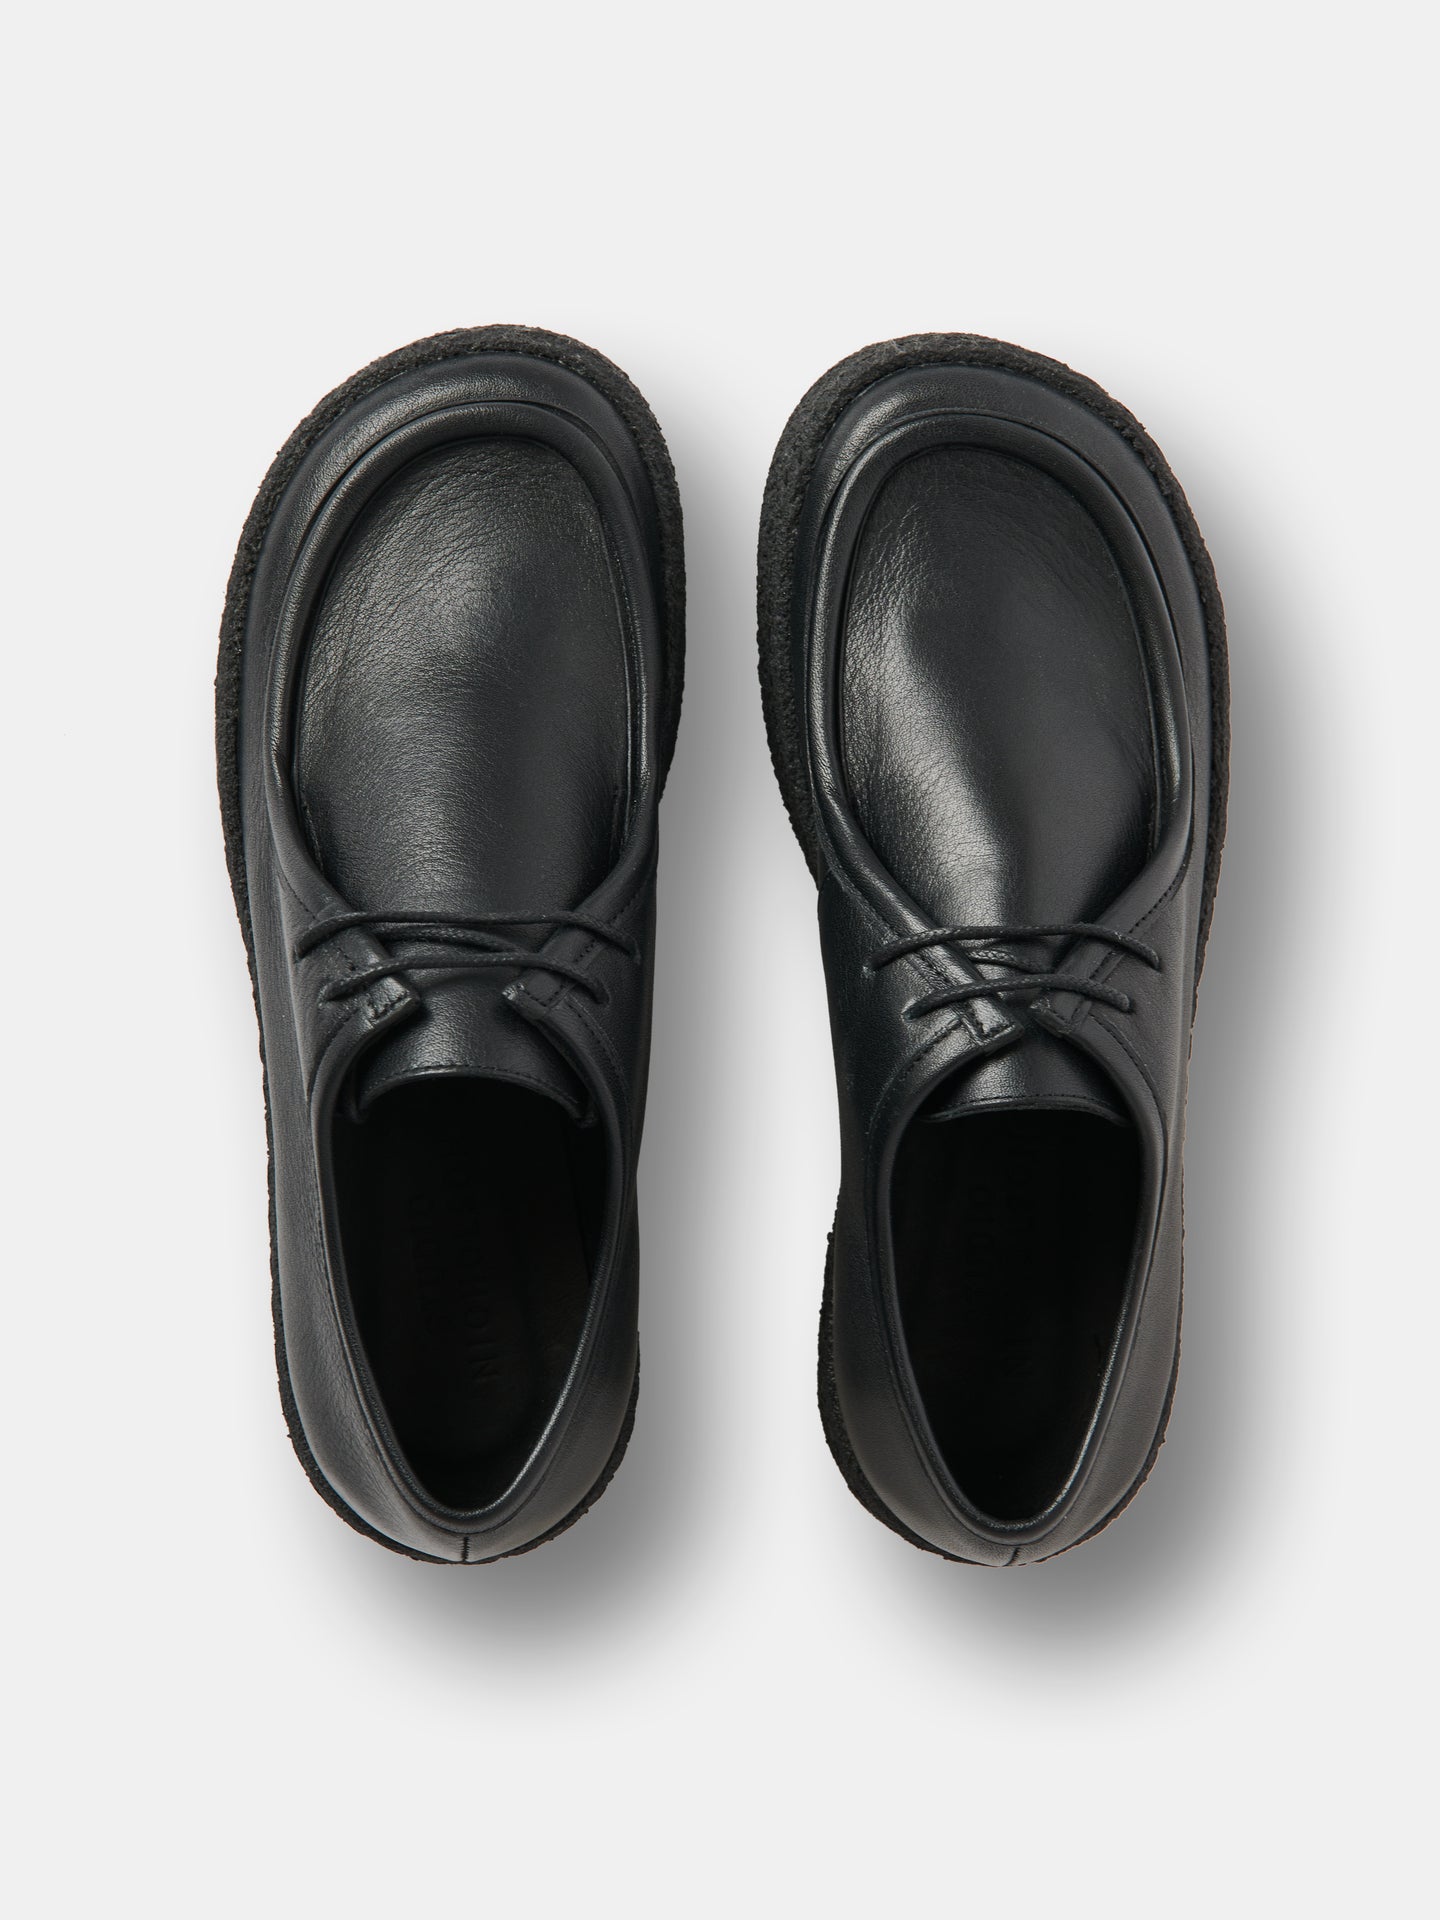 Studio Nicholson Boots, Loafers & Trainers | Stylish Footwear